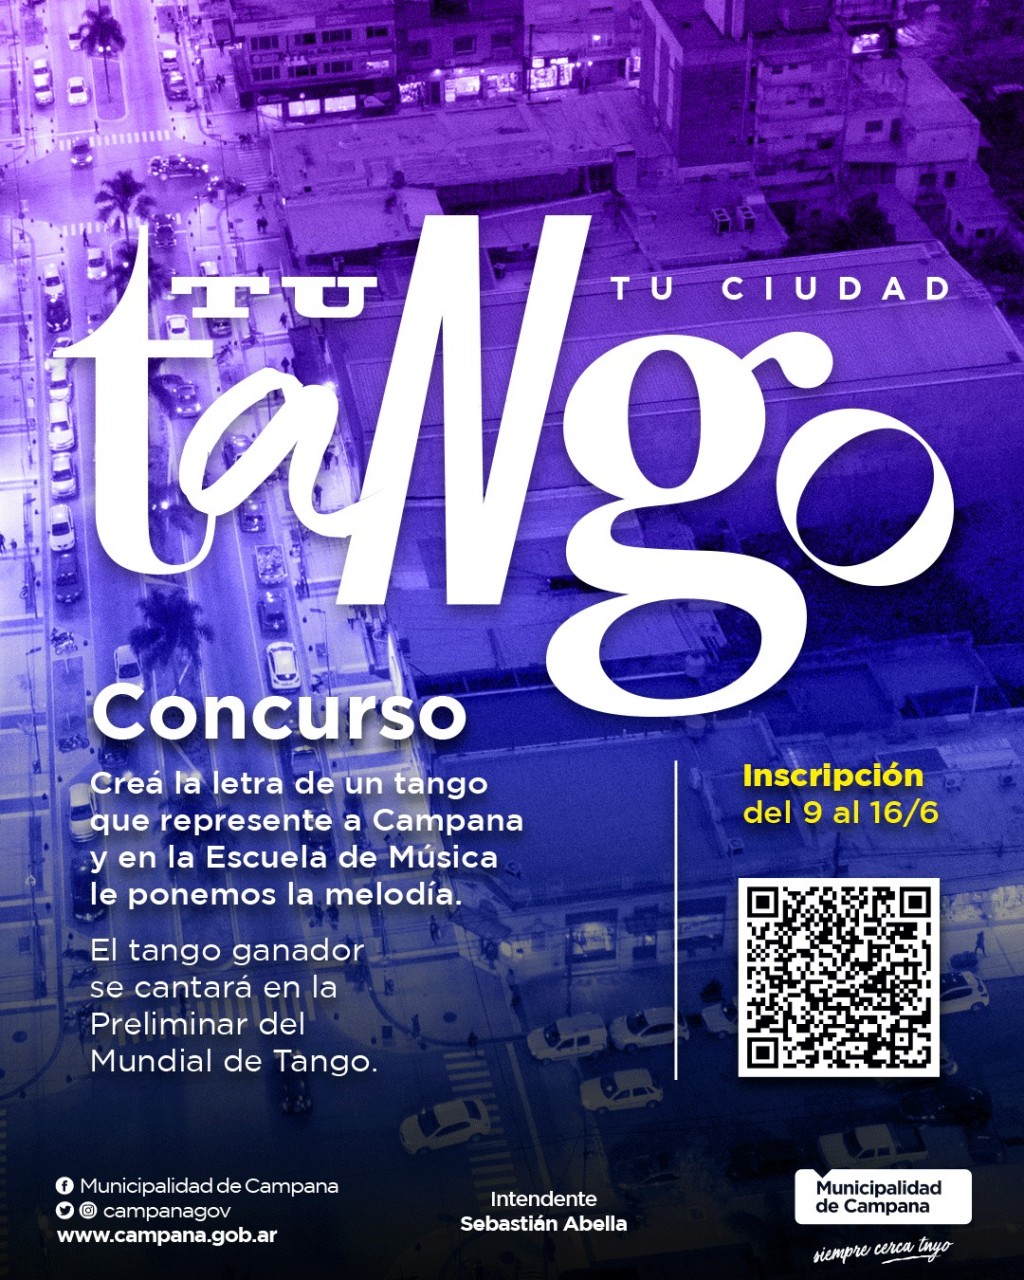 El Municipio lanzó un concurso para elegir la letra de un tango que represente a Campana